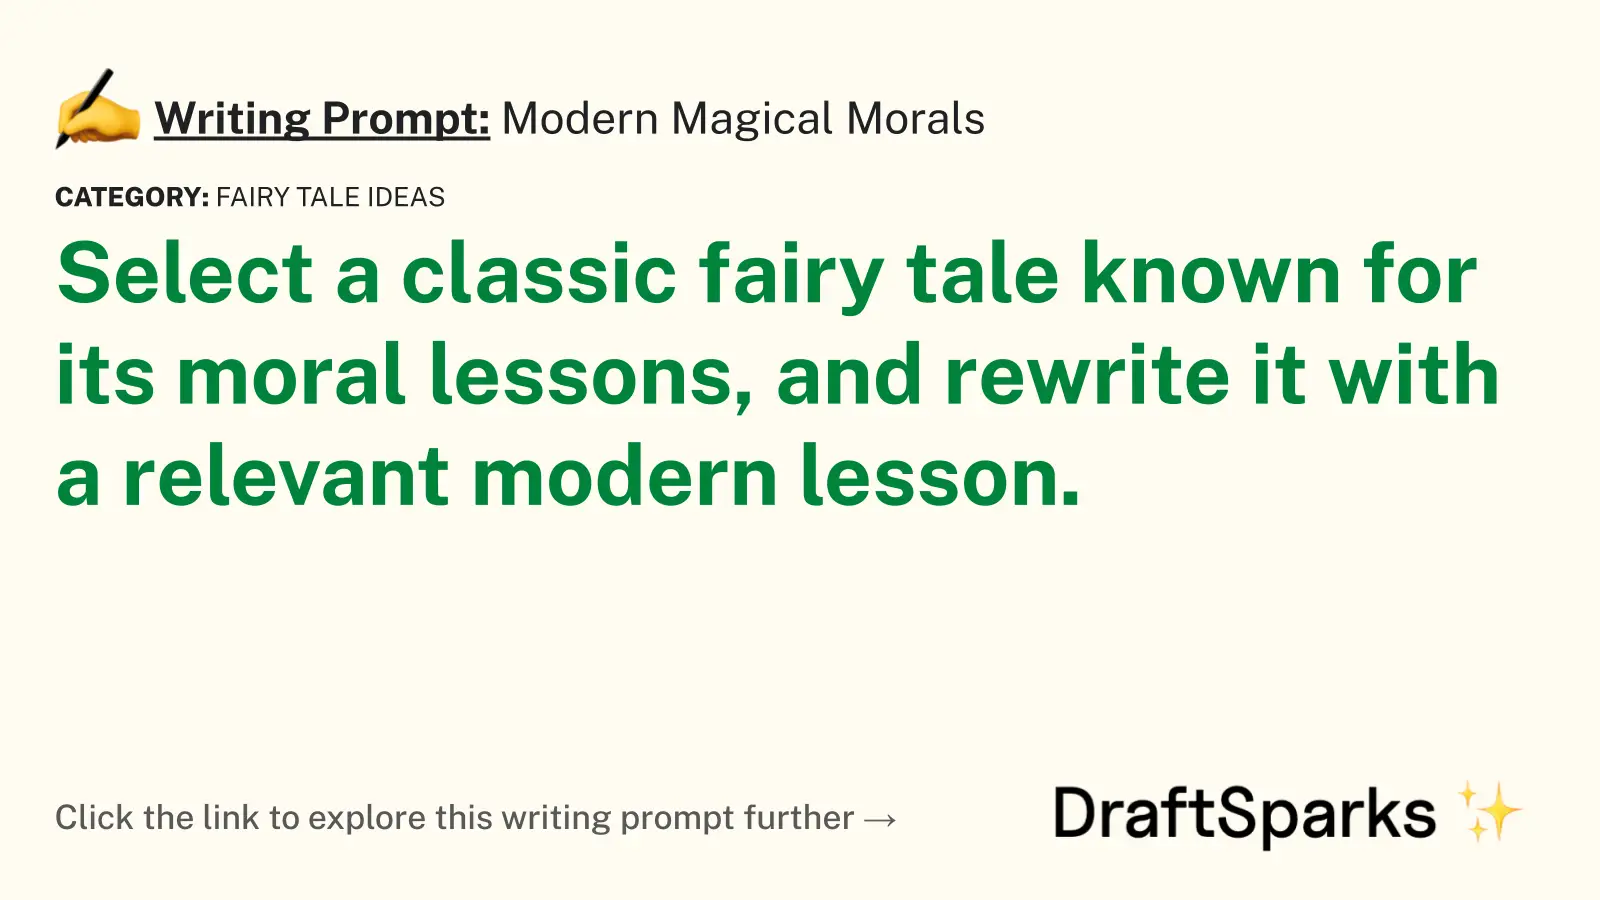 Modern Magical Morals